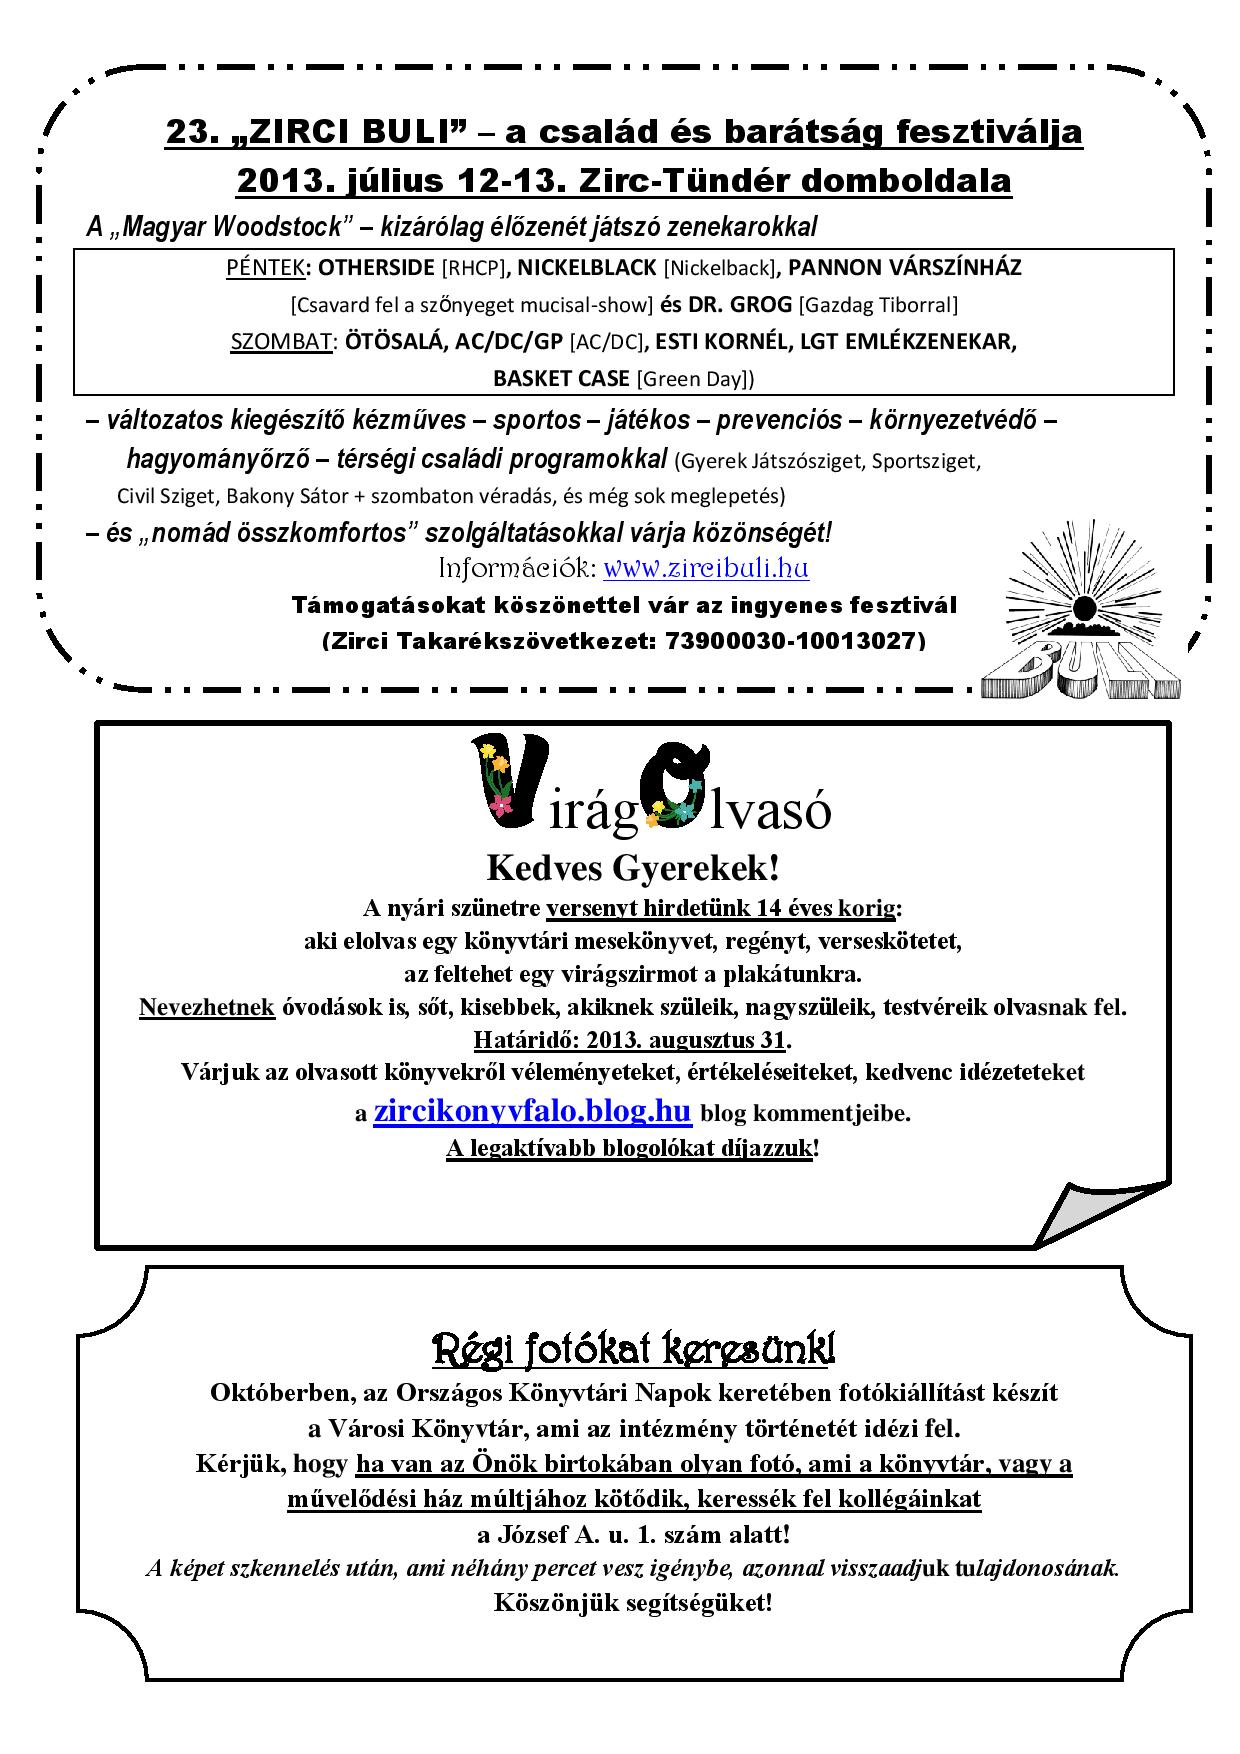 BAVKMHSKB-Zirc-2013.07.júliusi programajánlóvégleges-page-002_1.jpg